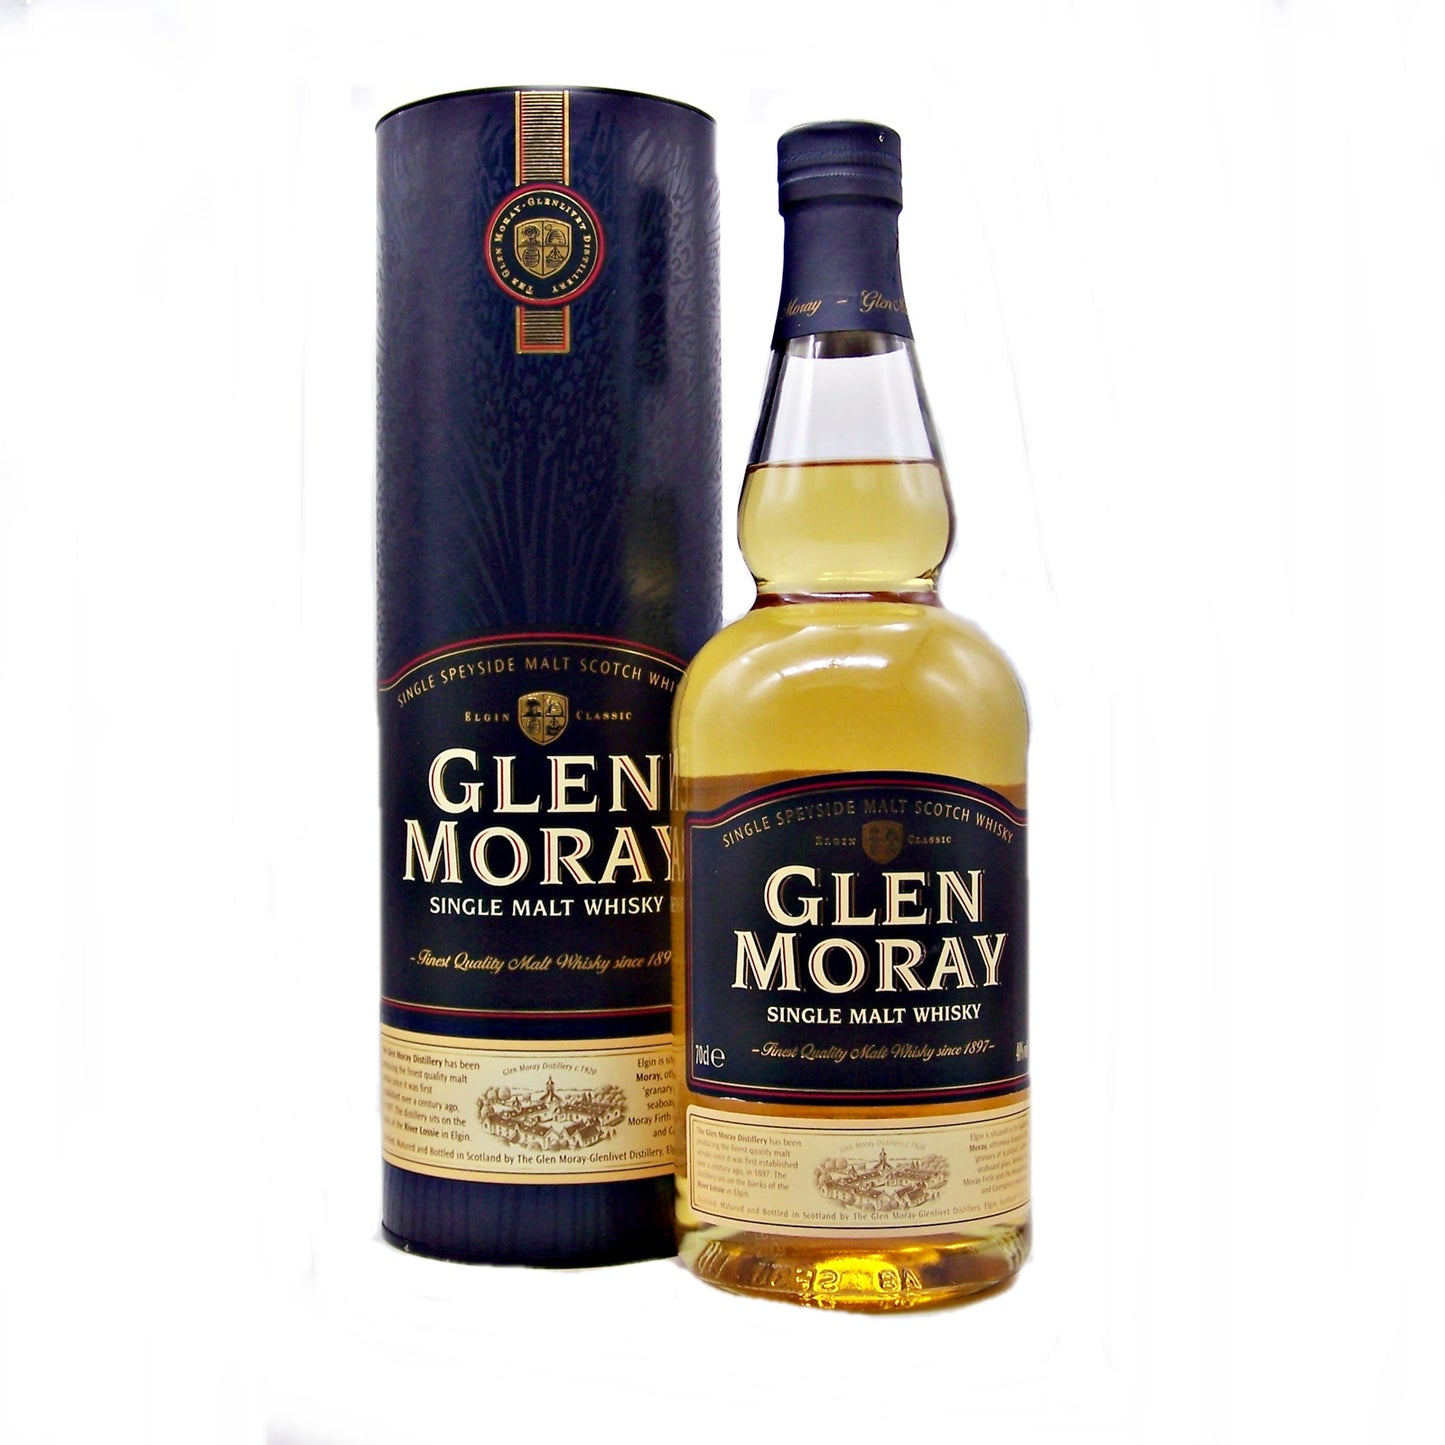 Glen Moray No Age Statement 2000's Bottling